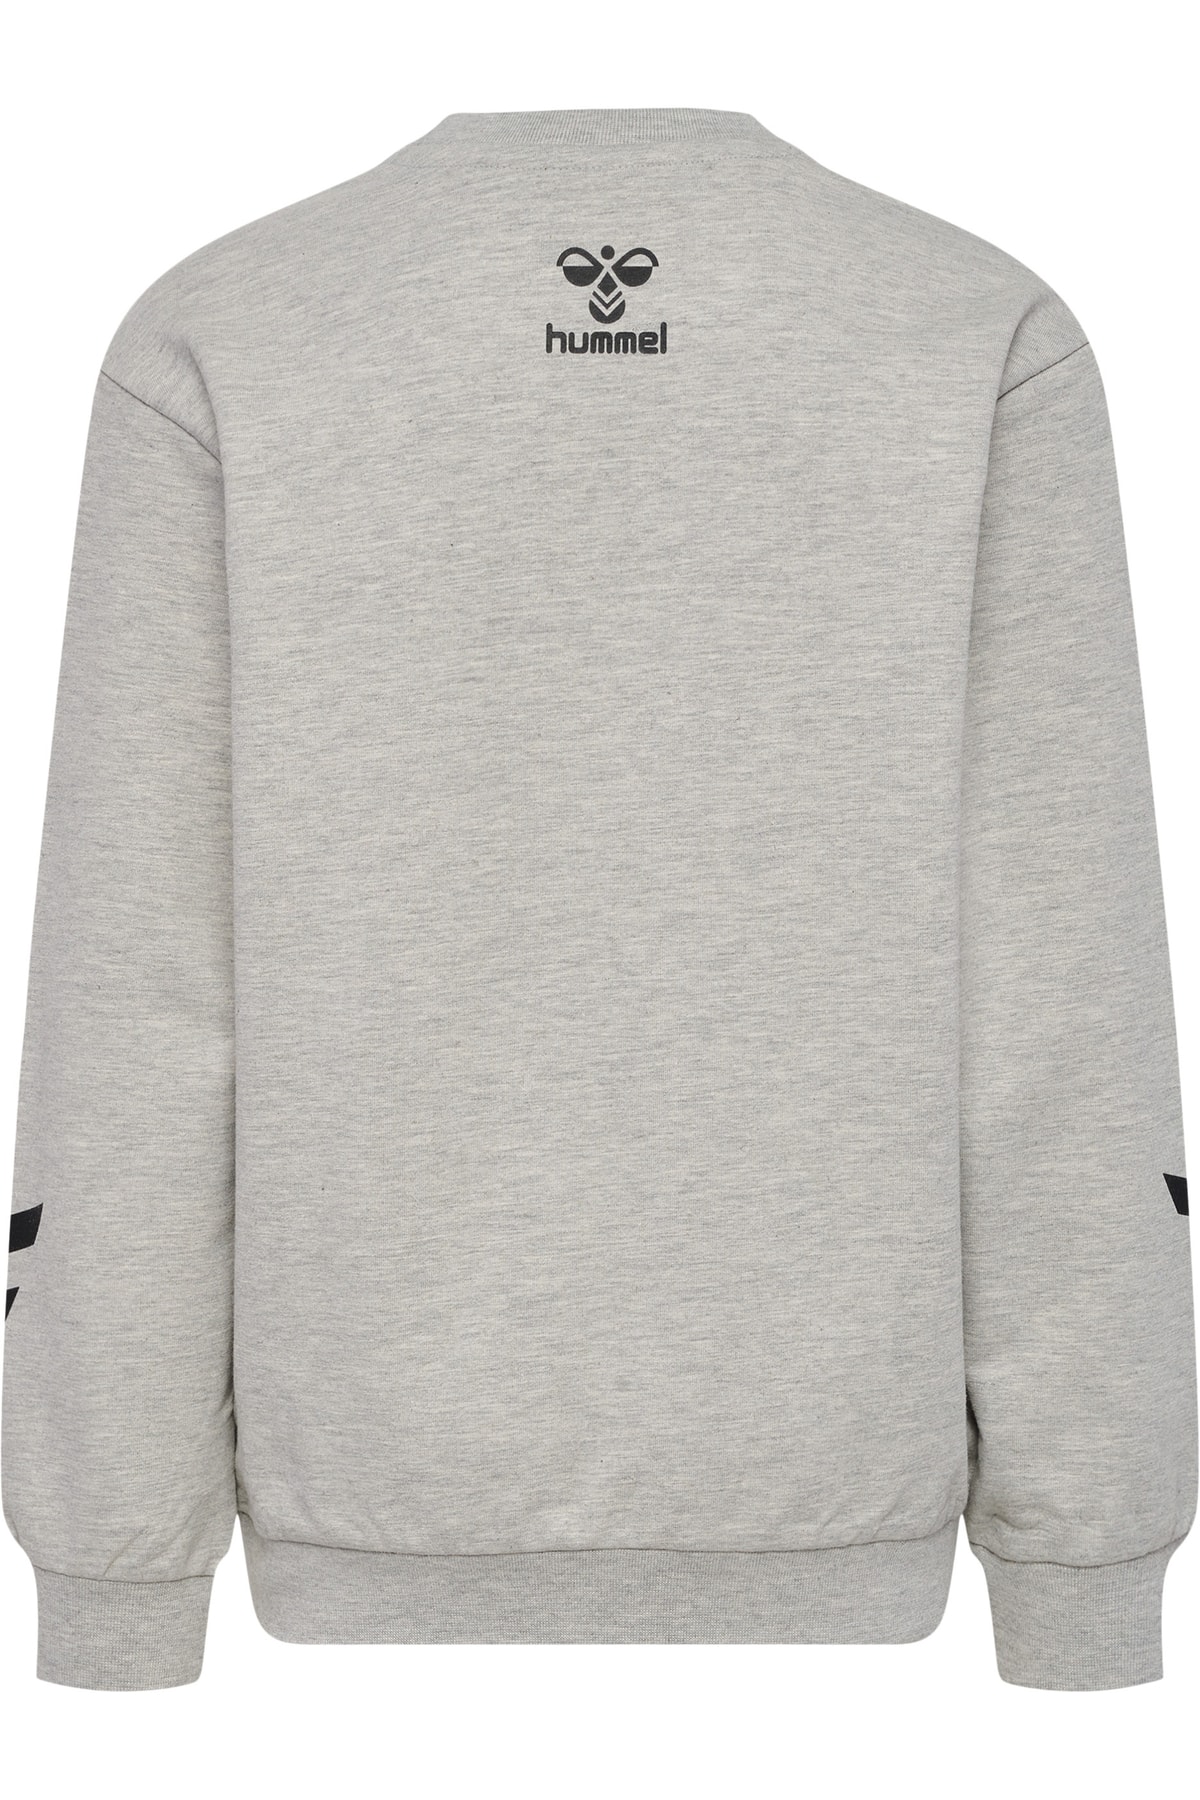 HUMMEL Sweatshirt Grau Regular Fit ER7411